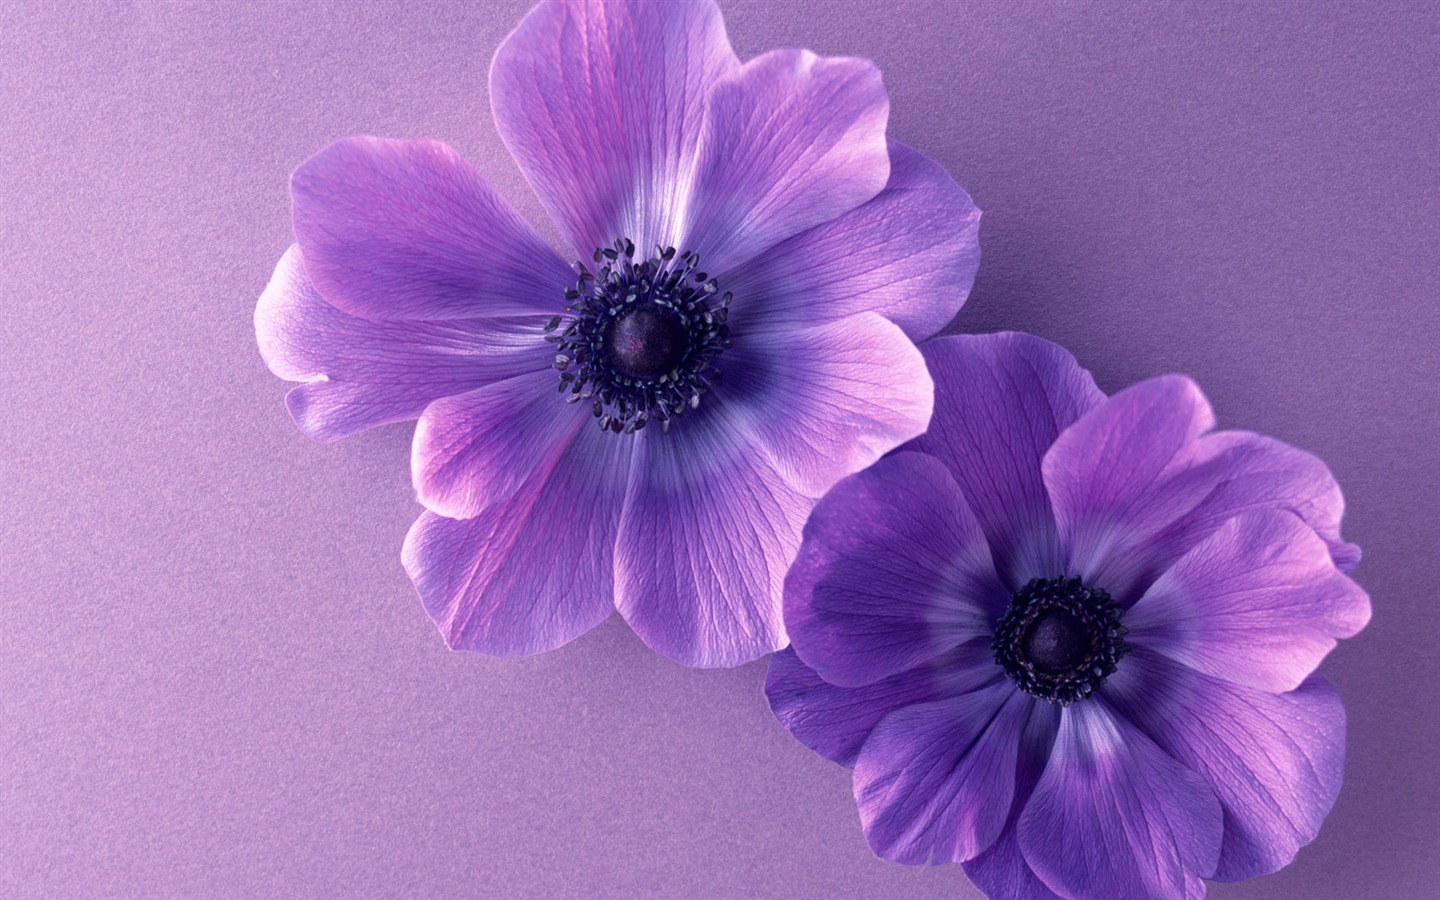 Flowers close-up (14) #20 - 1440x900